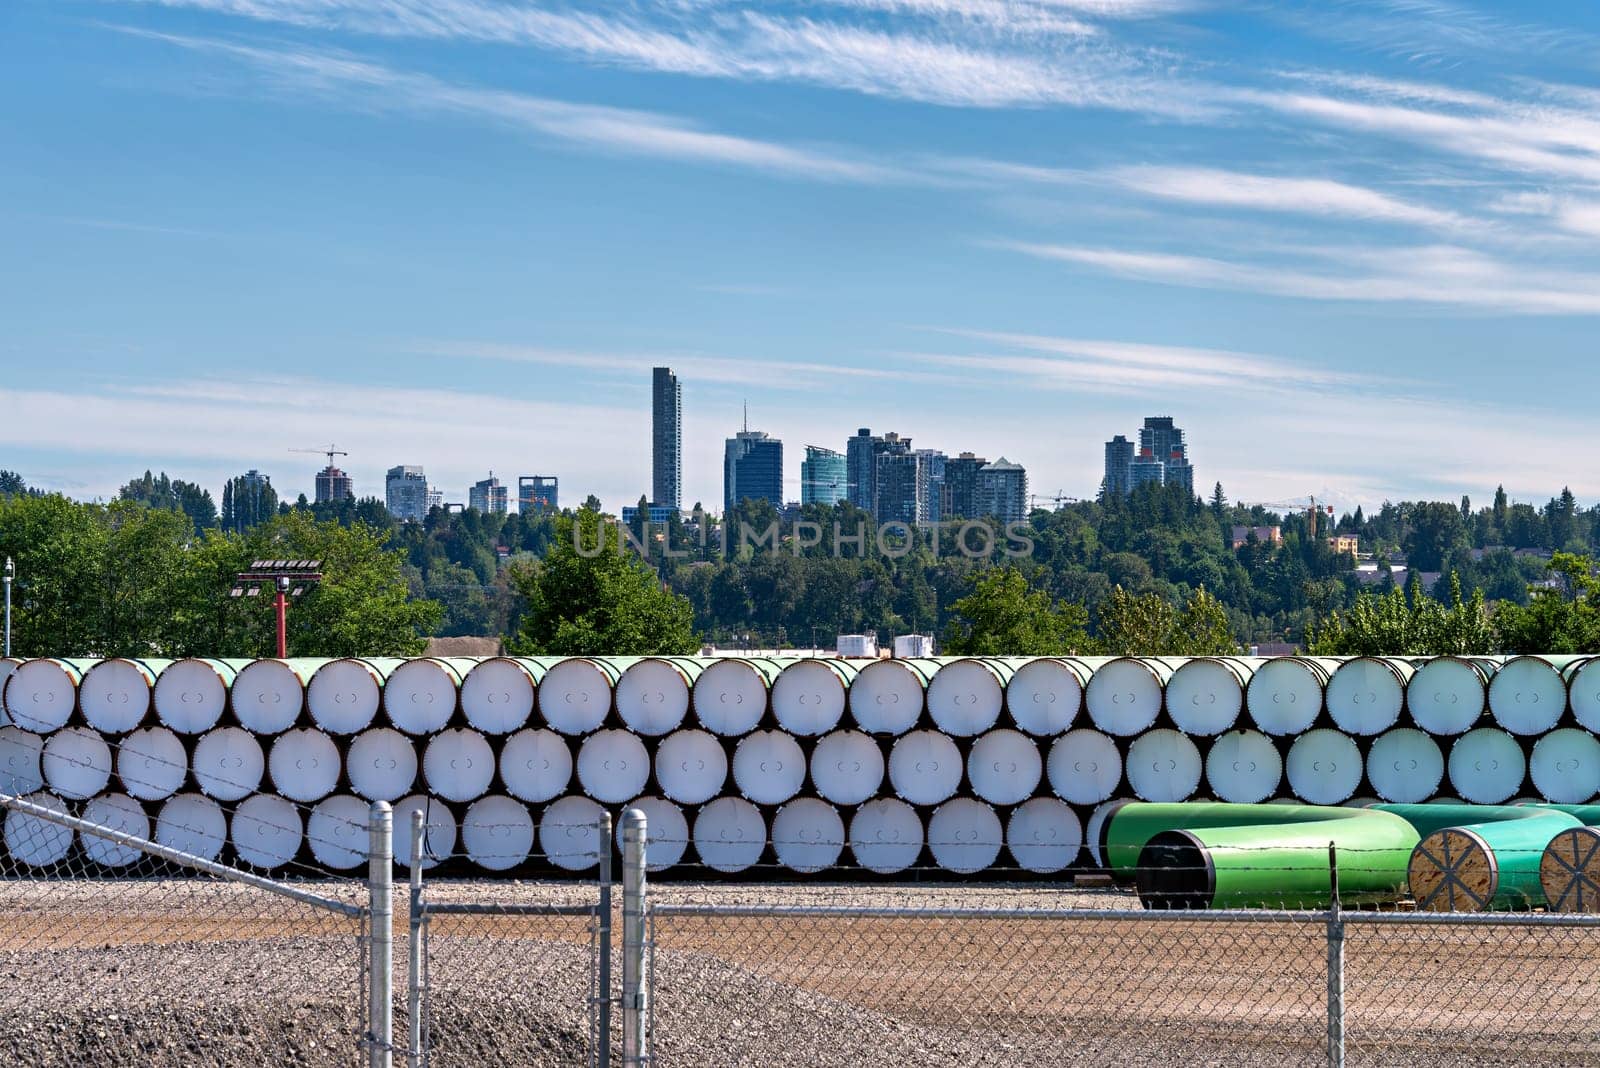 Storage of Large-diameter Seamless Steel Tubes in Vancouver by Imagenet